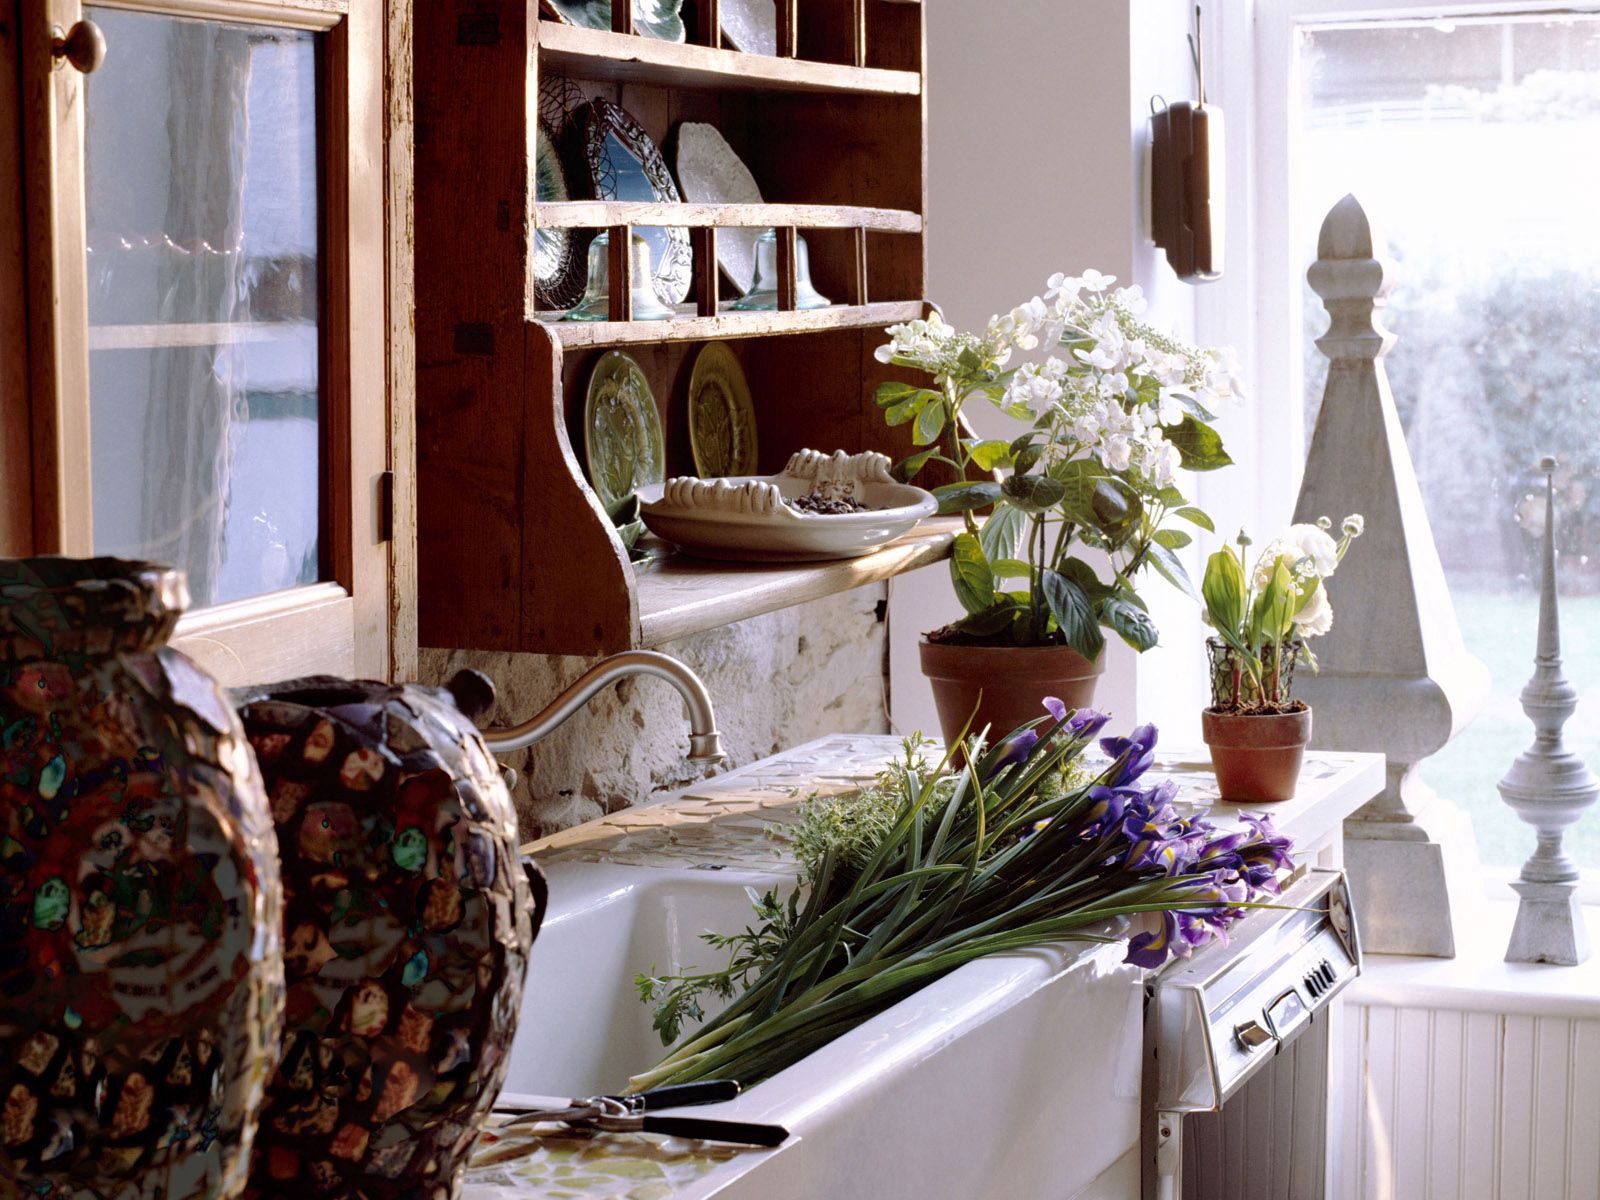 tables, plants, miscellanea, miscellaneous, coziness, comfort, dining room